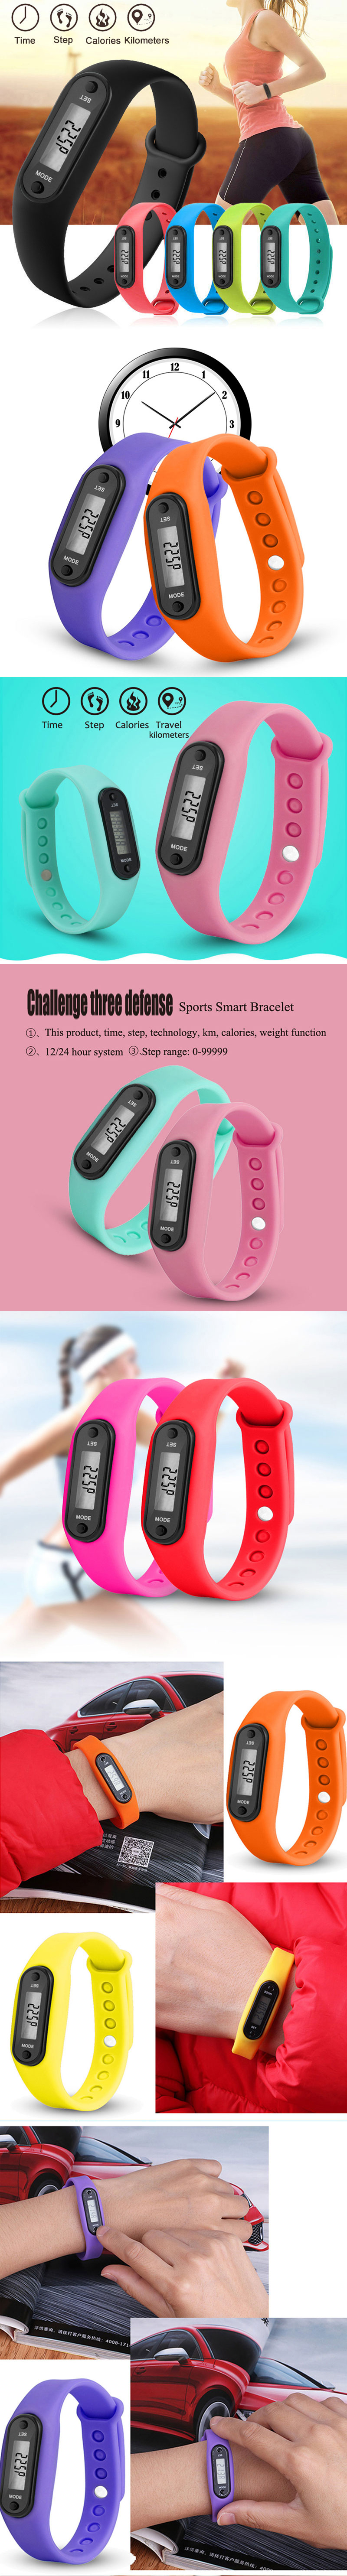 Fashion-Digital-Watch-Colorful-Silicone-Strap-Pedometer-Calories-Men-Women-Sport-Watch-Bracelet-1288918